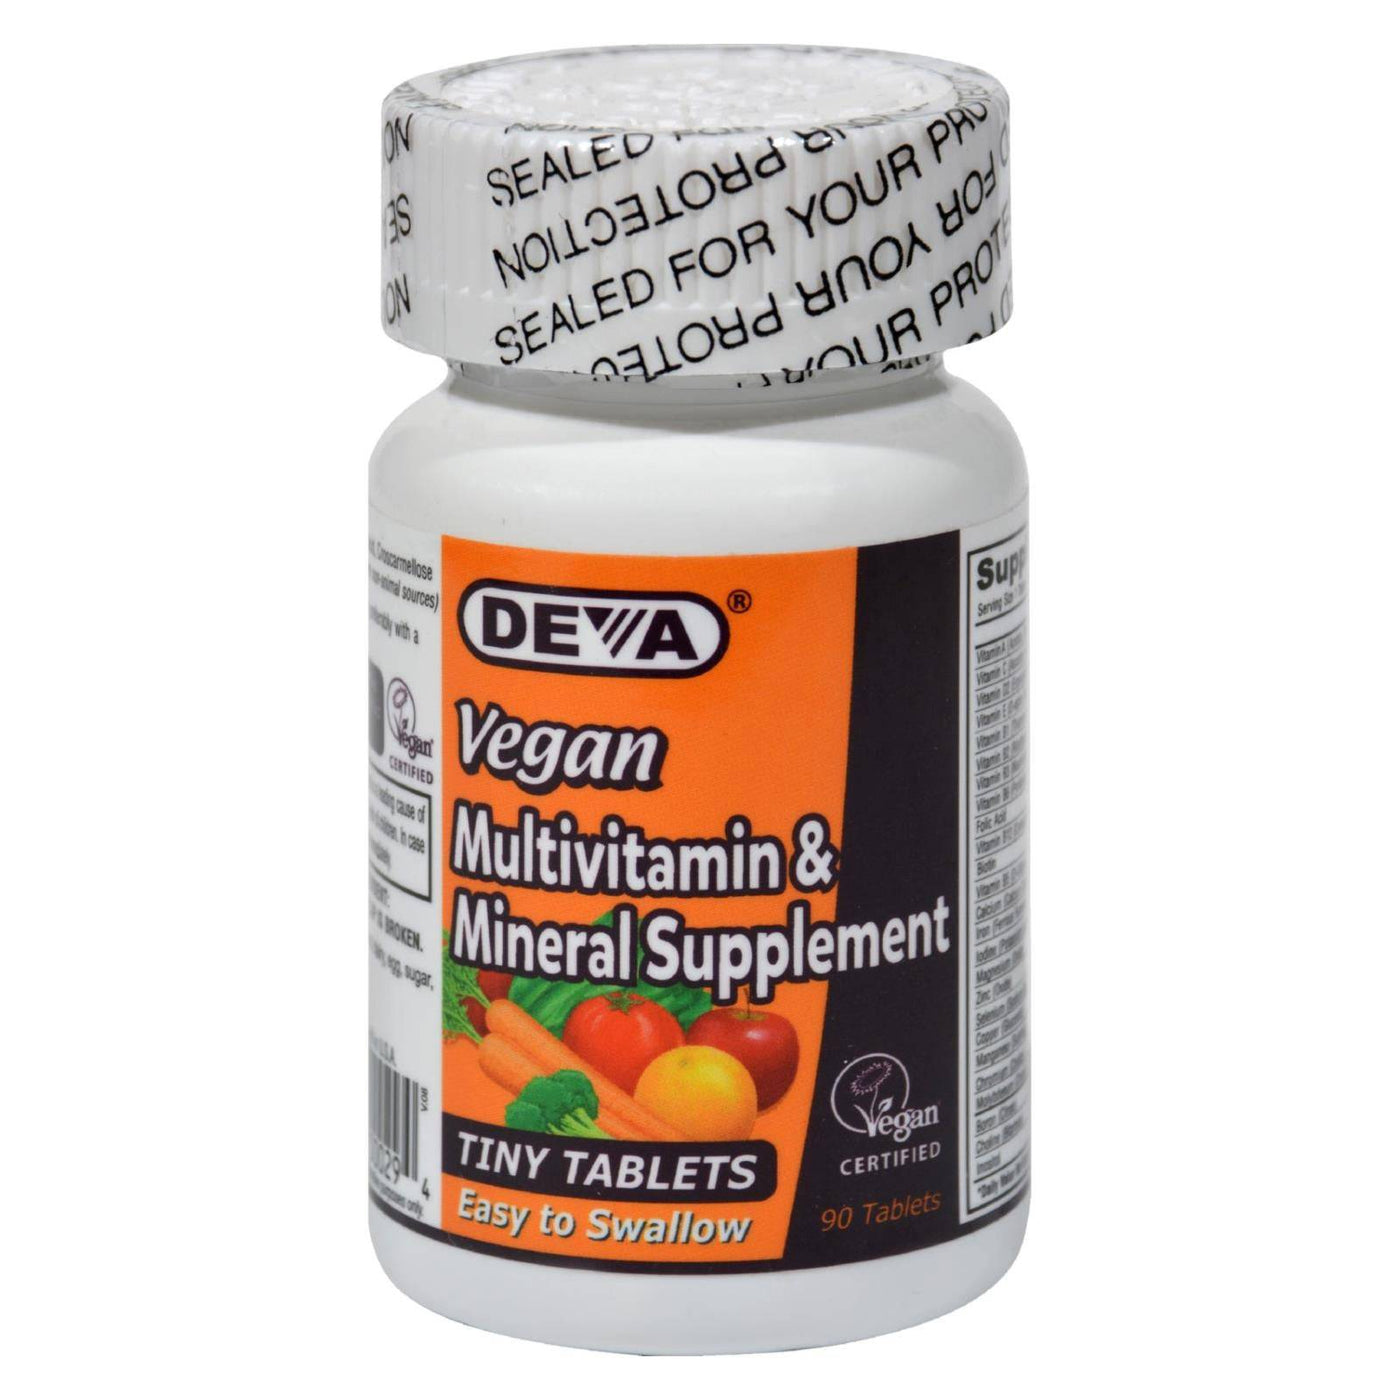 Deva Vegan Vitamins - Multivitamin And Mineral Supplement - 90 Tiny Tablets | OnlyNaturals.us